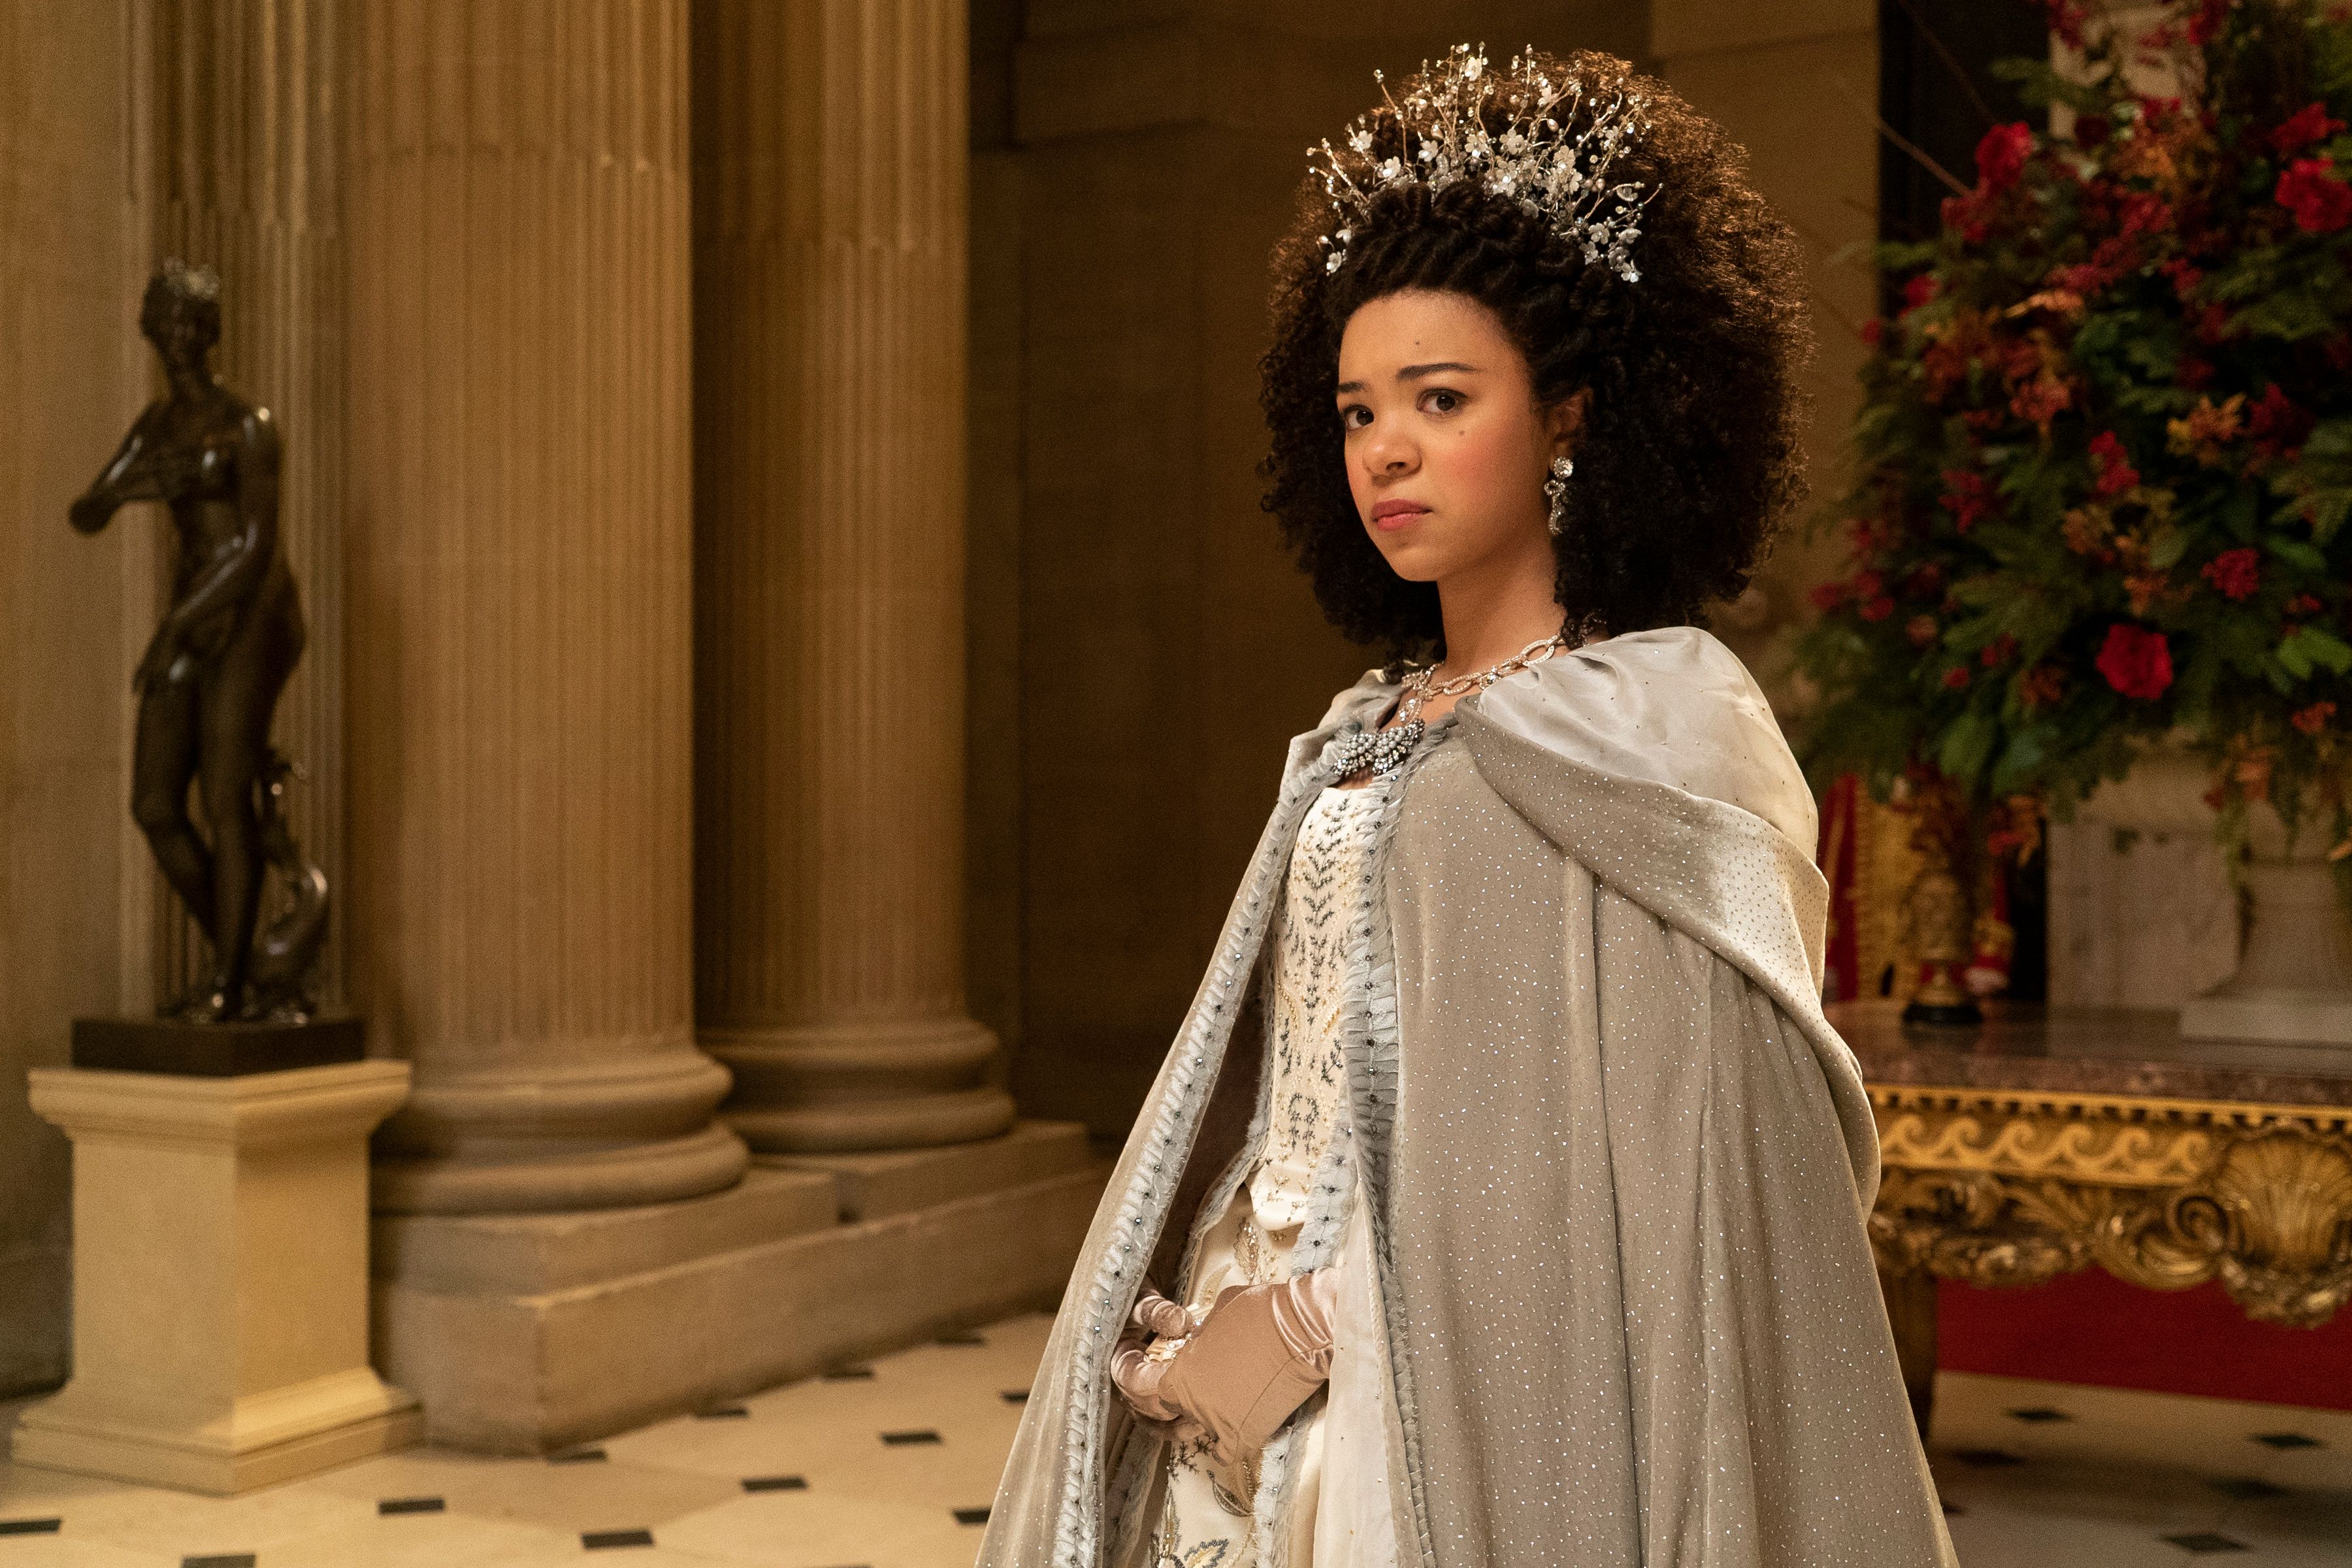  India Amarteifio as Queen Charlotte in Bridgerton prequel first look